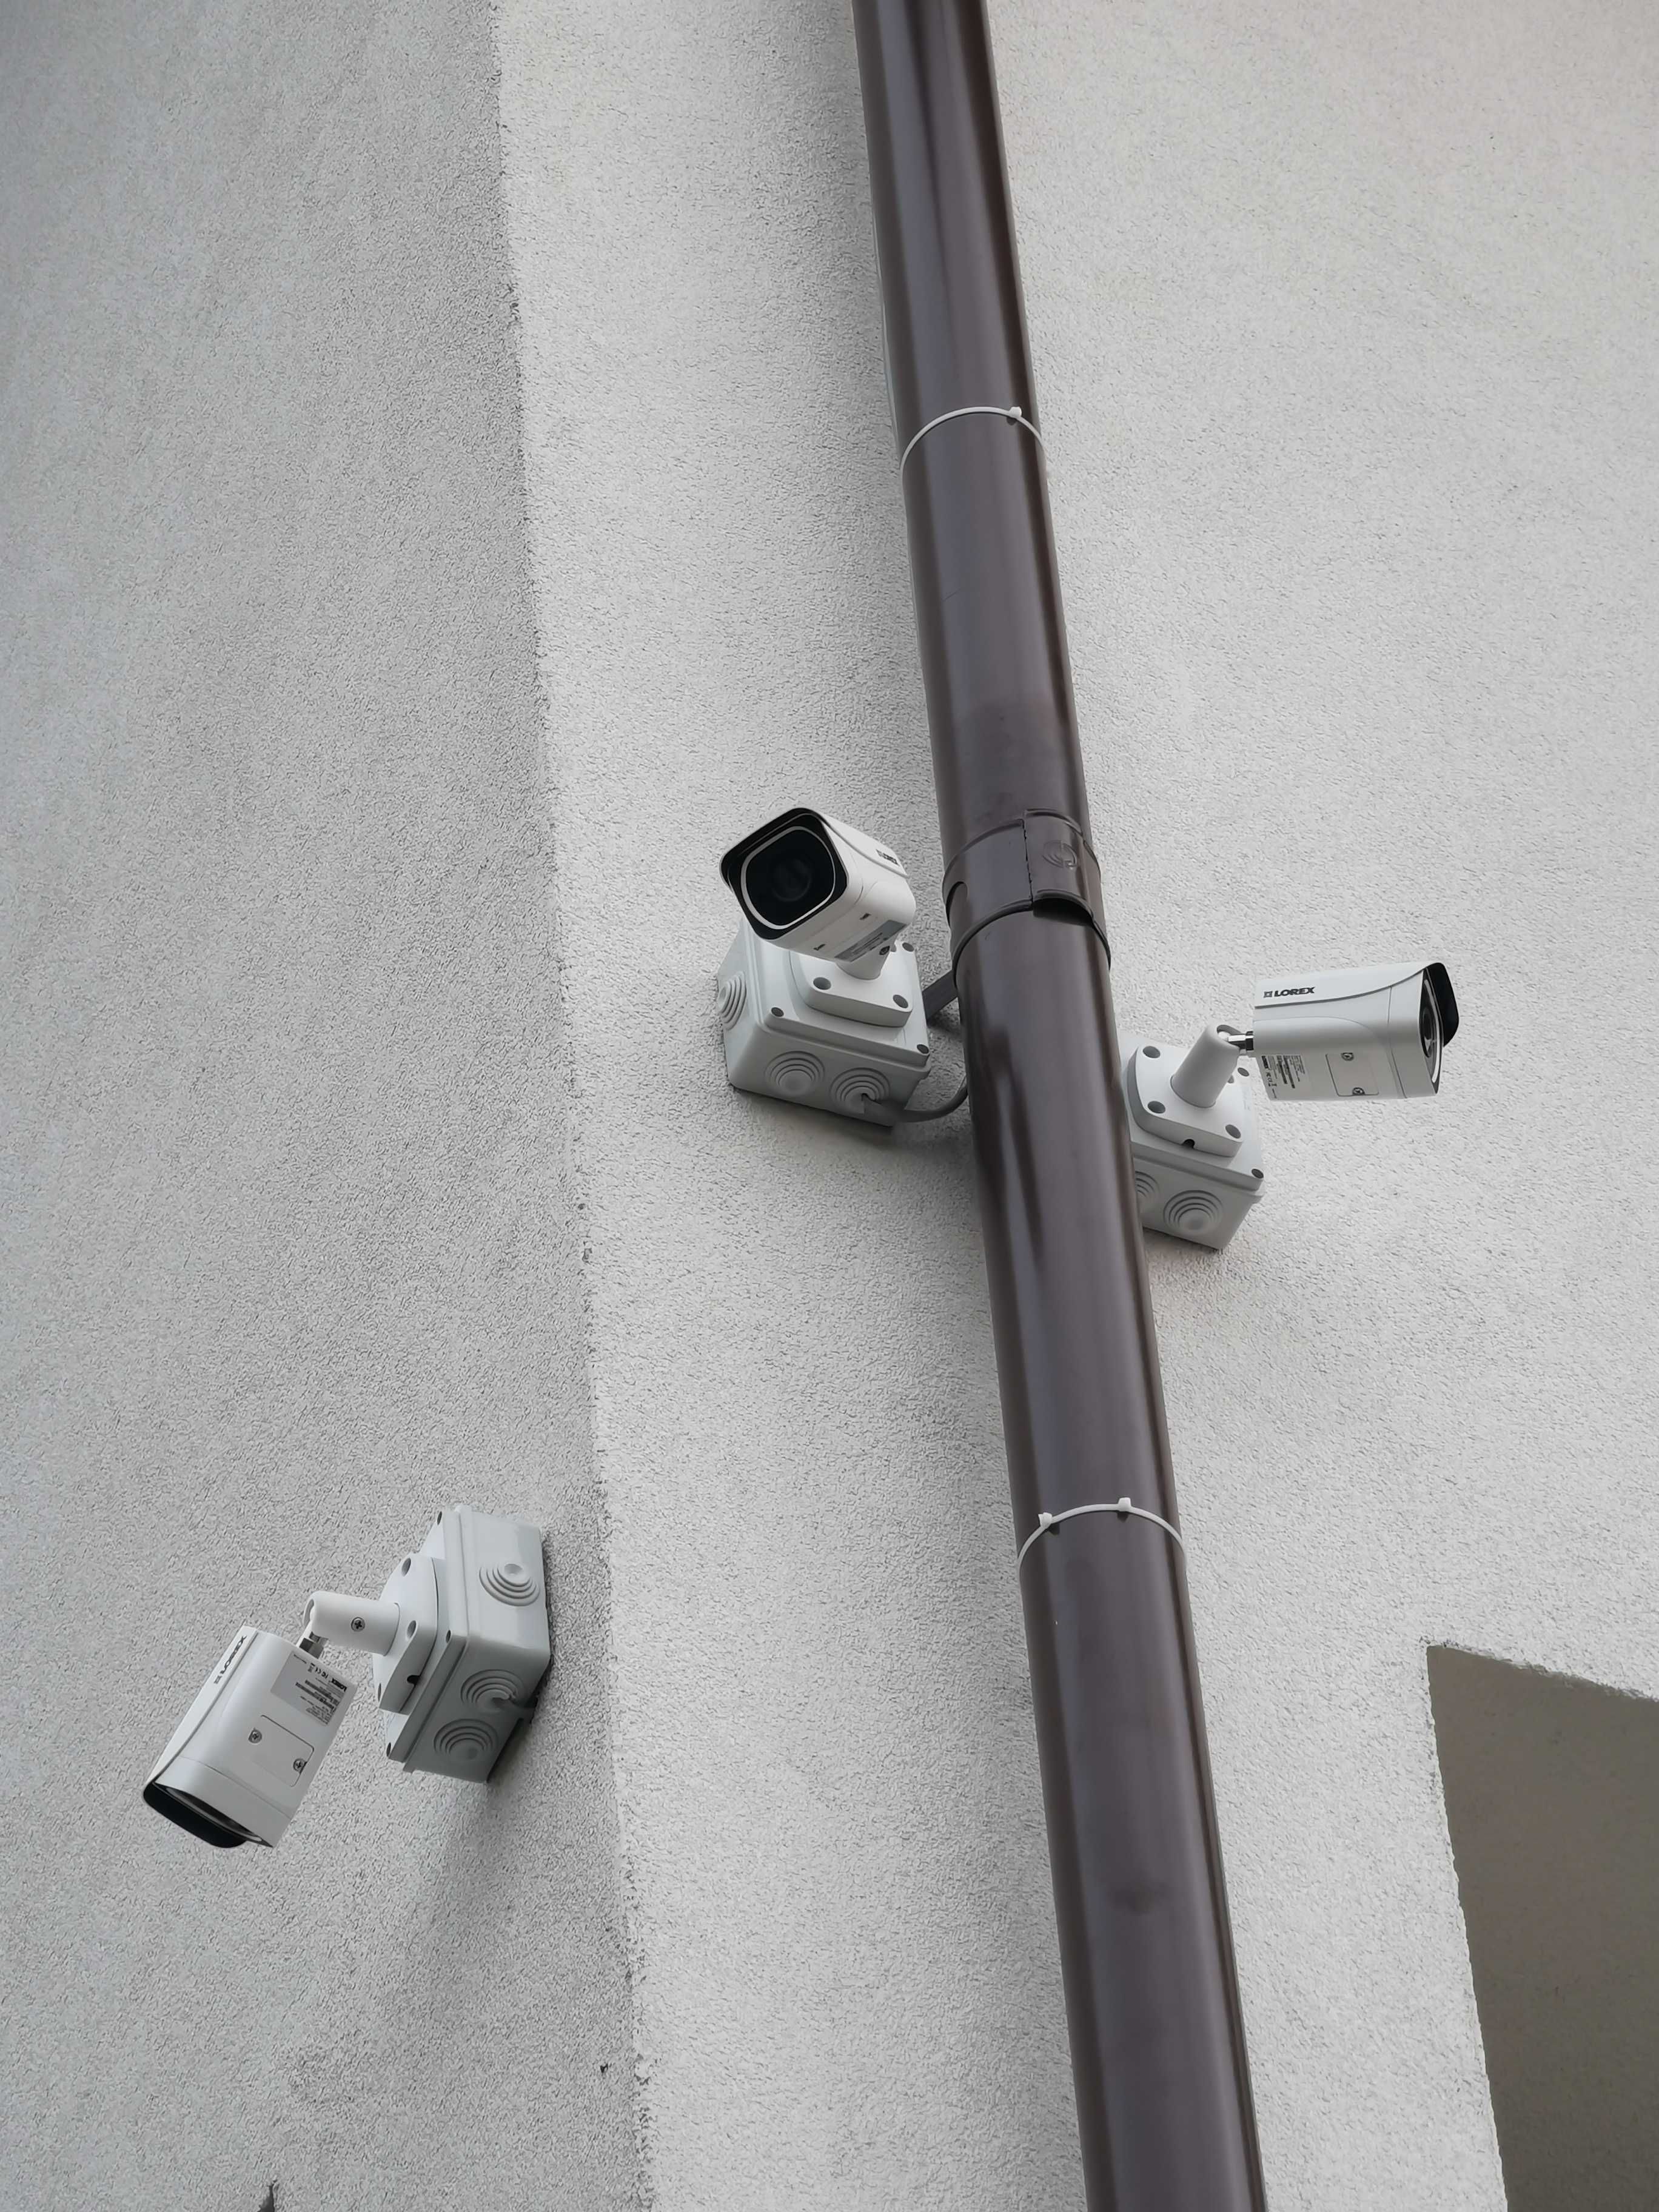 Sistem 4 8 camere supraveghere video filmat instalare inclusa Dej